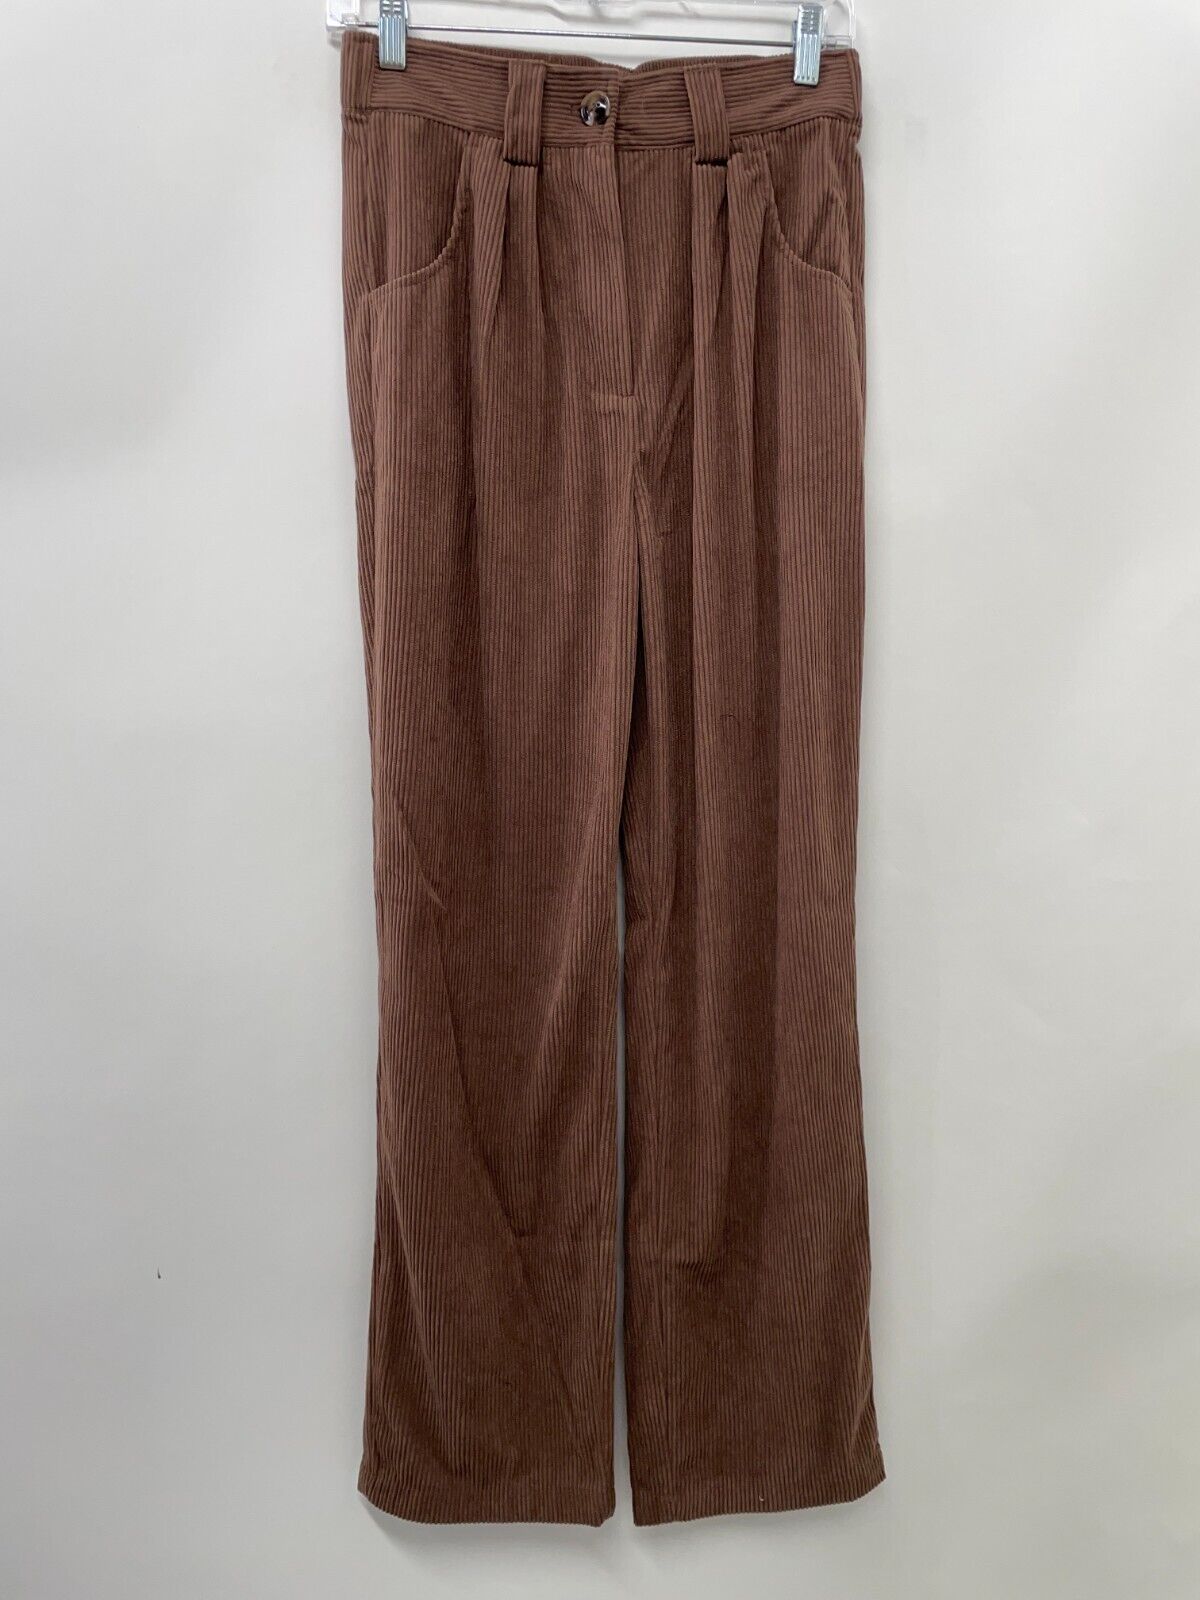 Halara Women's S Mid Rise Corduroy Casual Pants Brown Elastic Waist Cuffed NWT